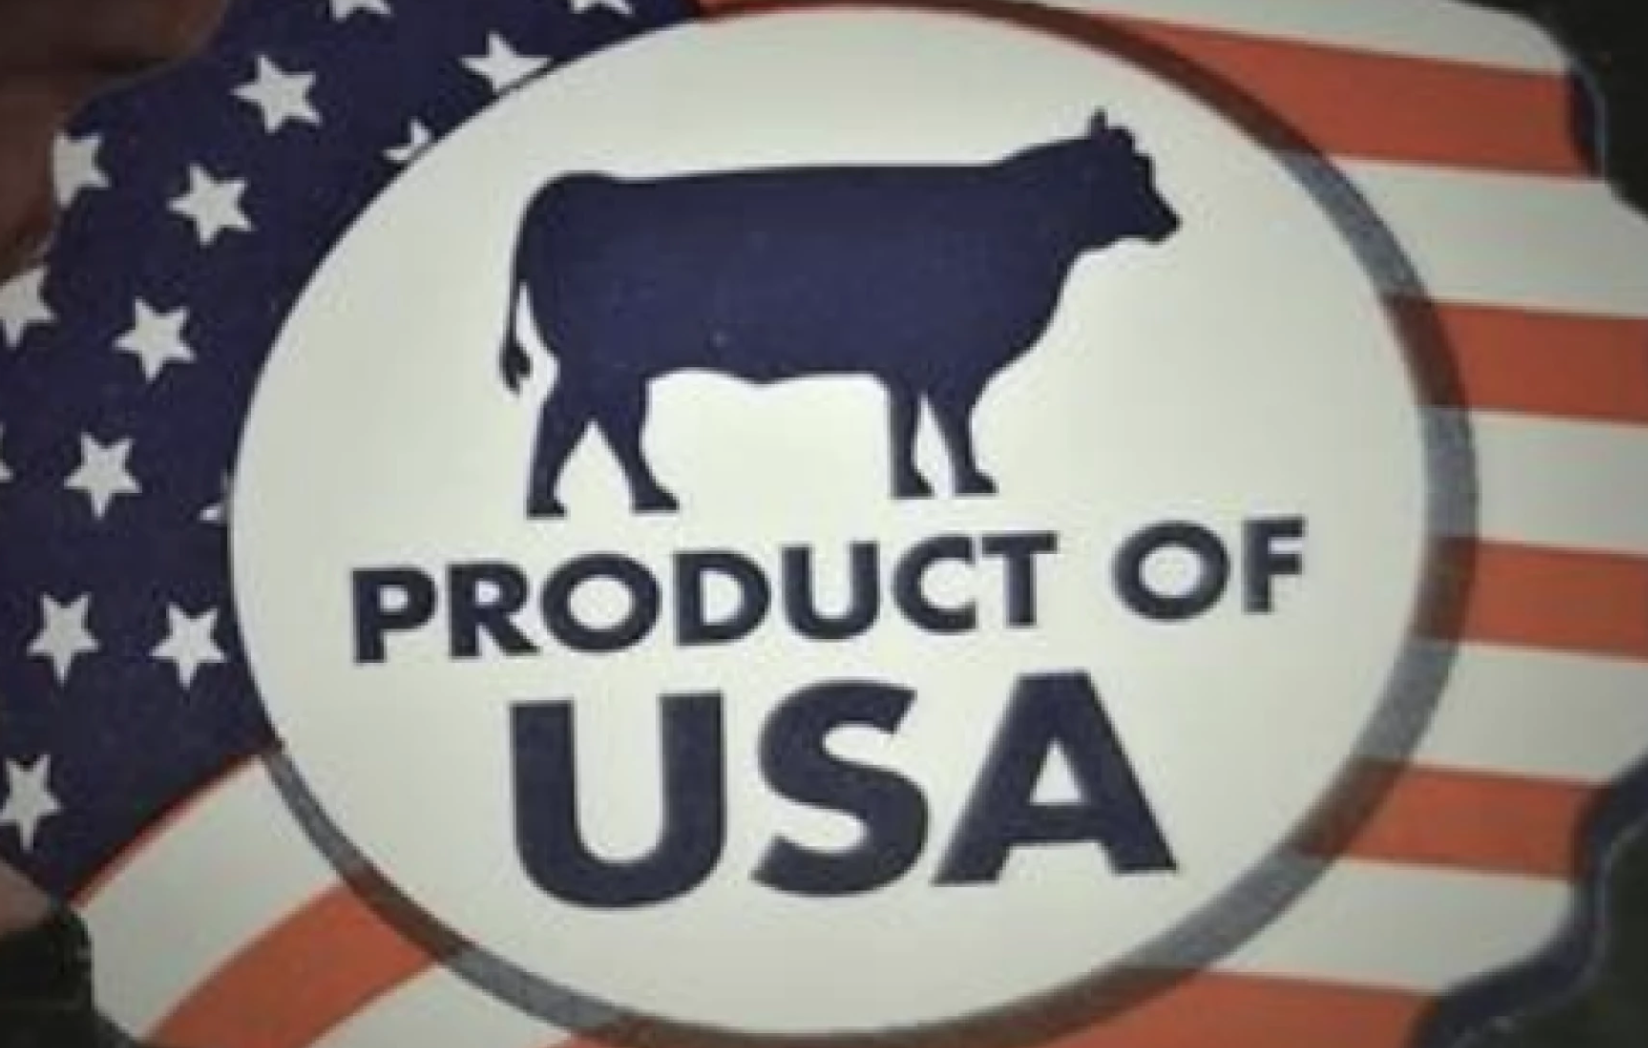 Product of U.S.A. label; courtesy of FSIS USDA, public domain.